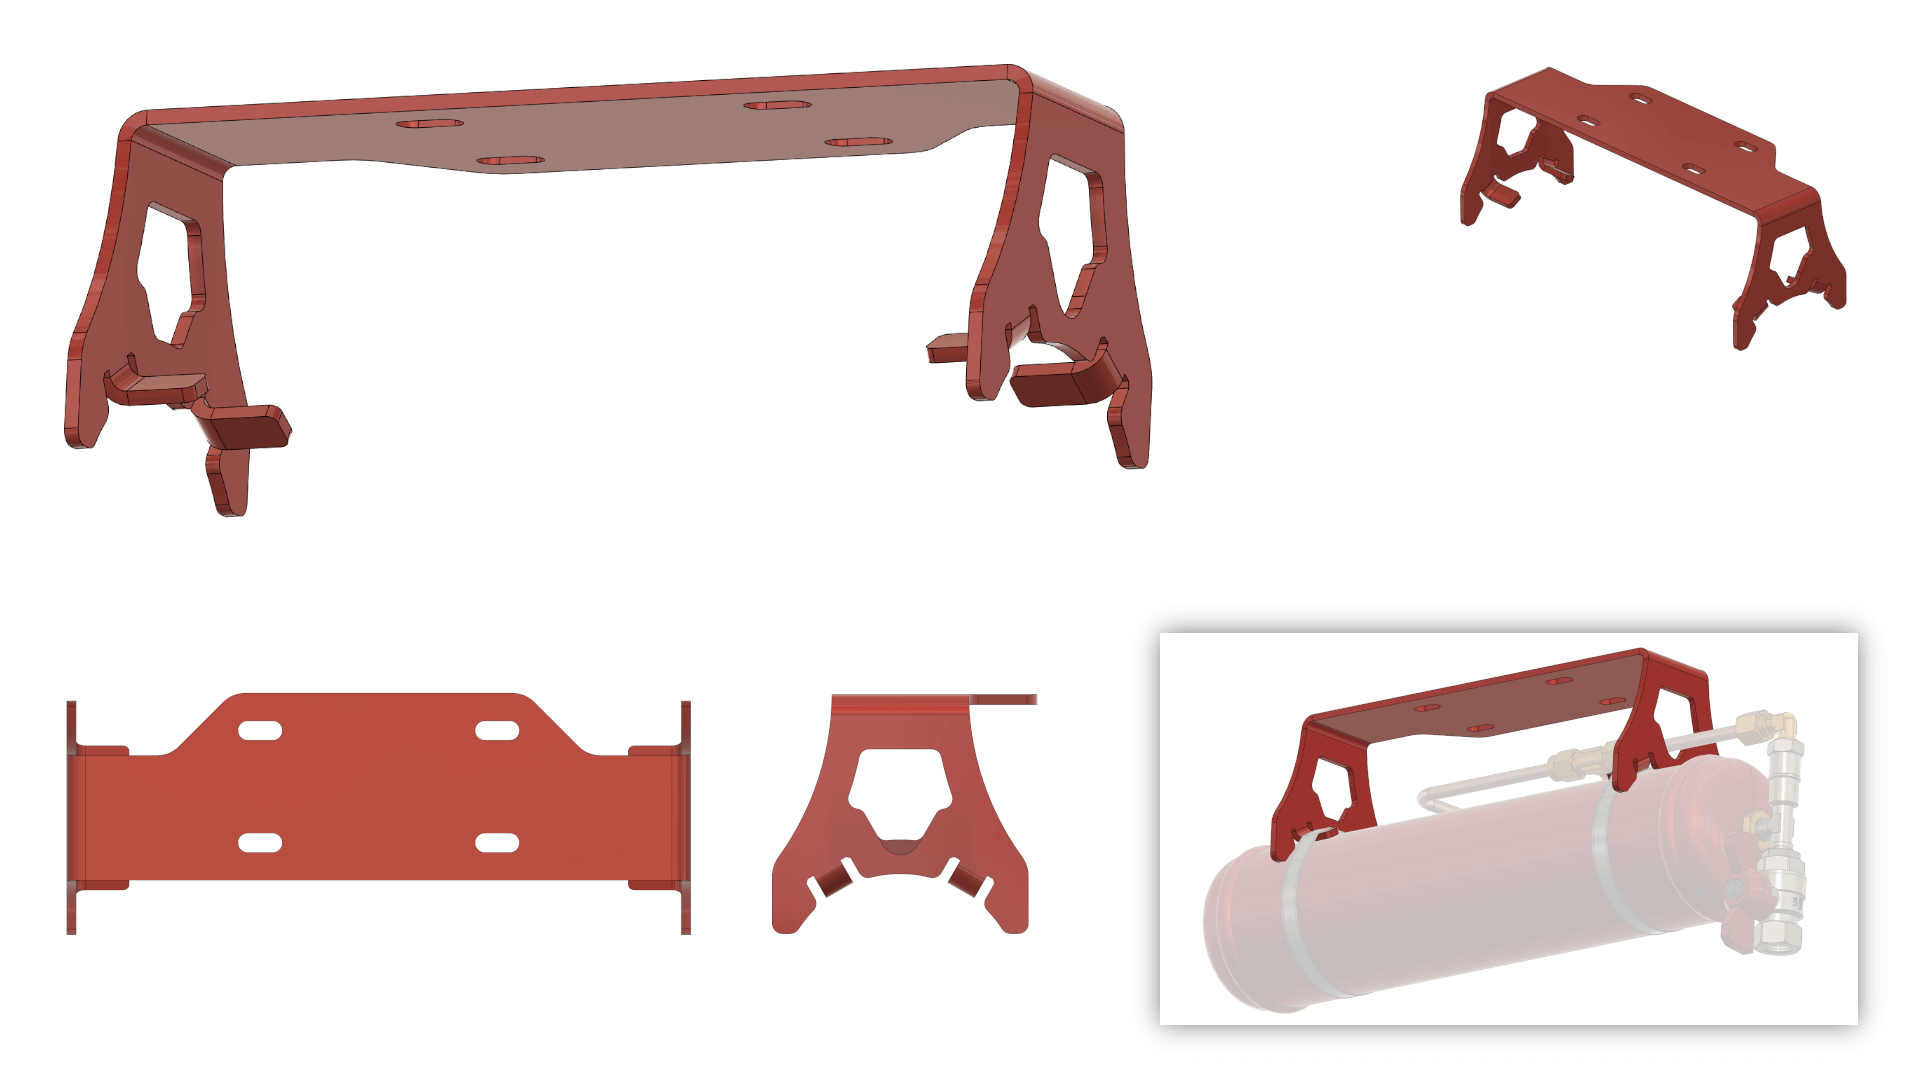 Air Tank Bracket (CAD-preview)